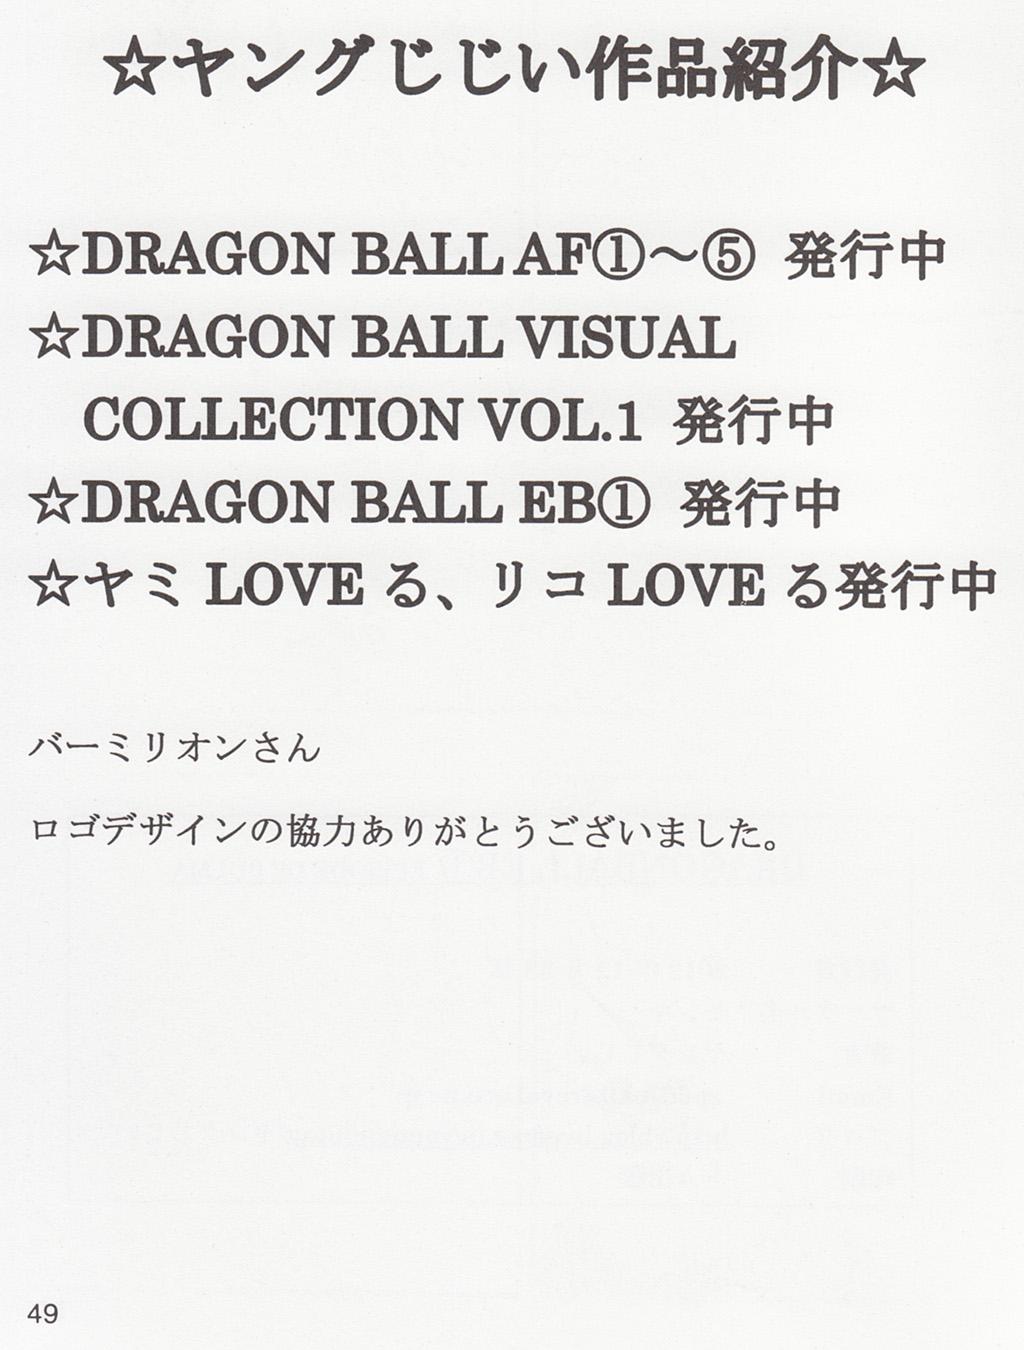 Dragon Ball EB 1 - Episode of Bulma 48